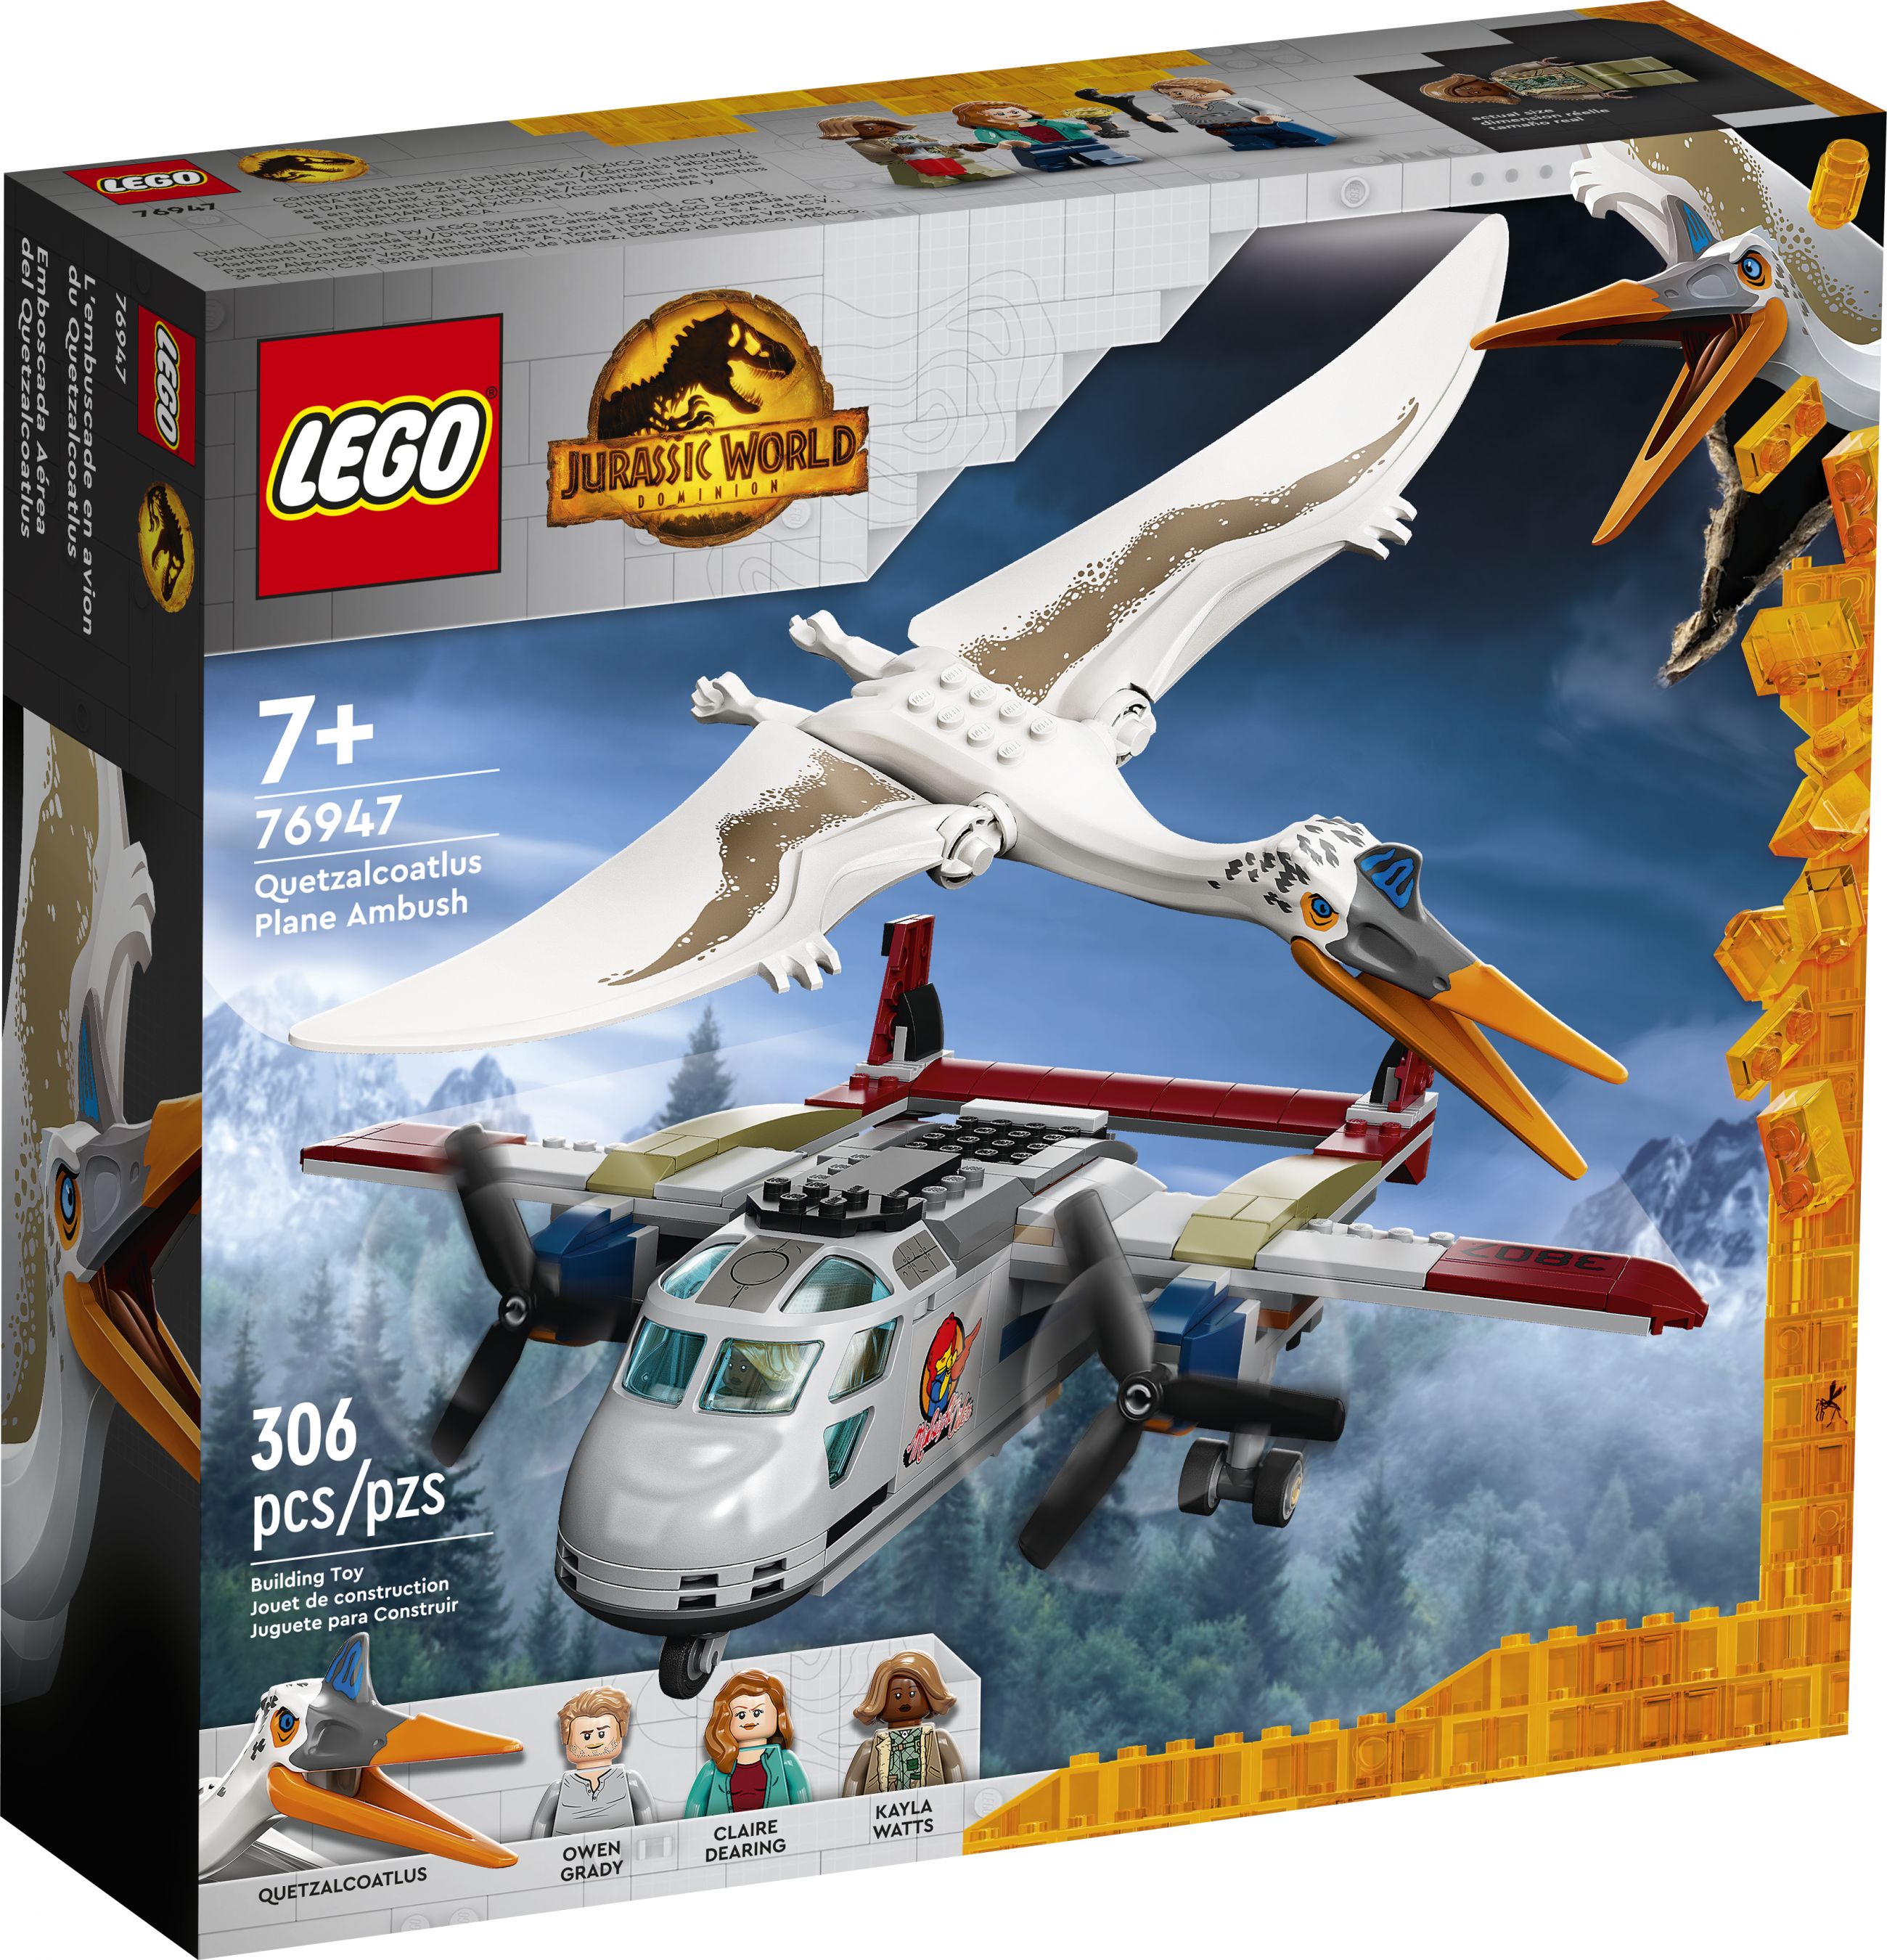 LEGO Jurassic World 76947 Quetzalcoatlus: Flugzeug-Überfall LEGO_76947_Box1_v39.jpg